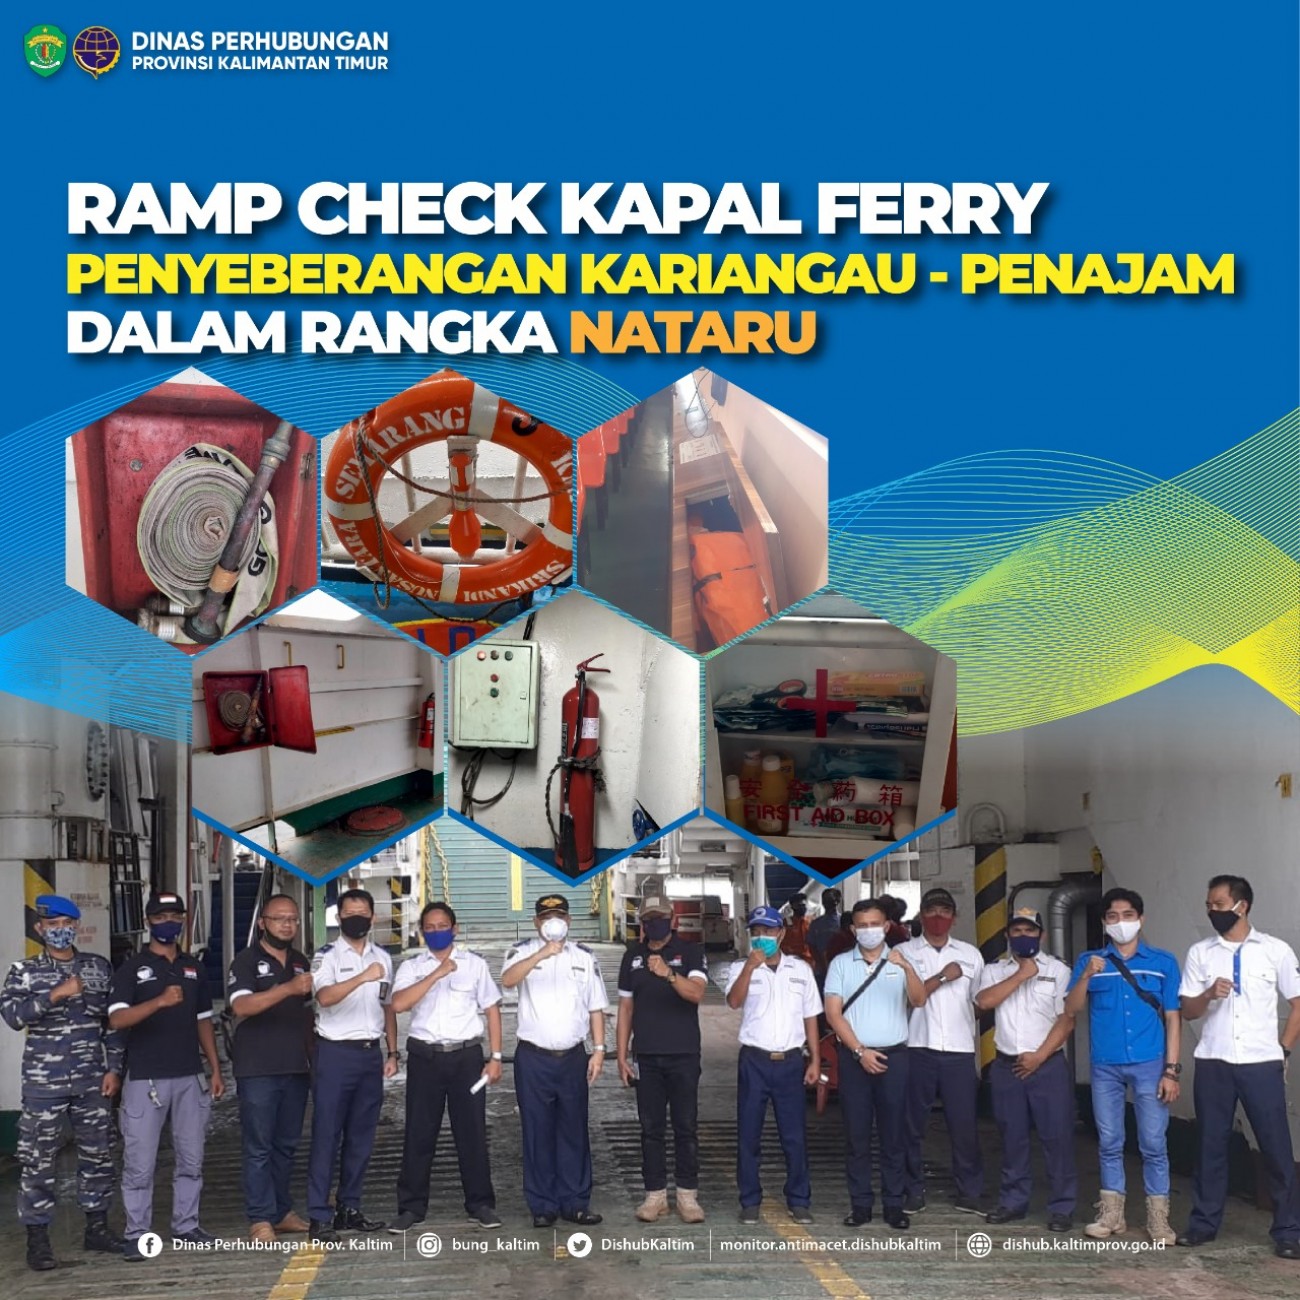 Ramp Check Kapal Ferry Penyeberangan Kariangau - Penajam Dalam Rangka NATARU